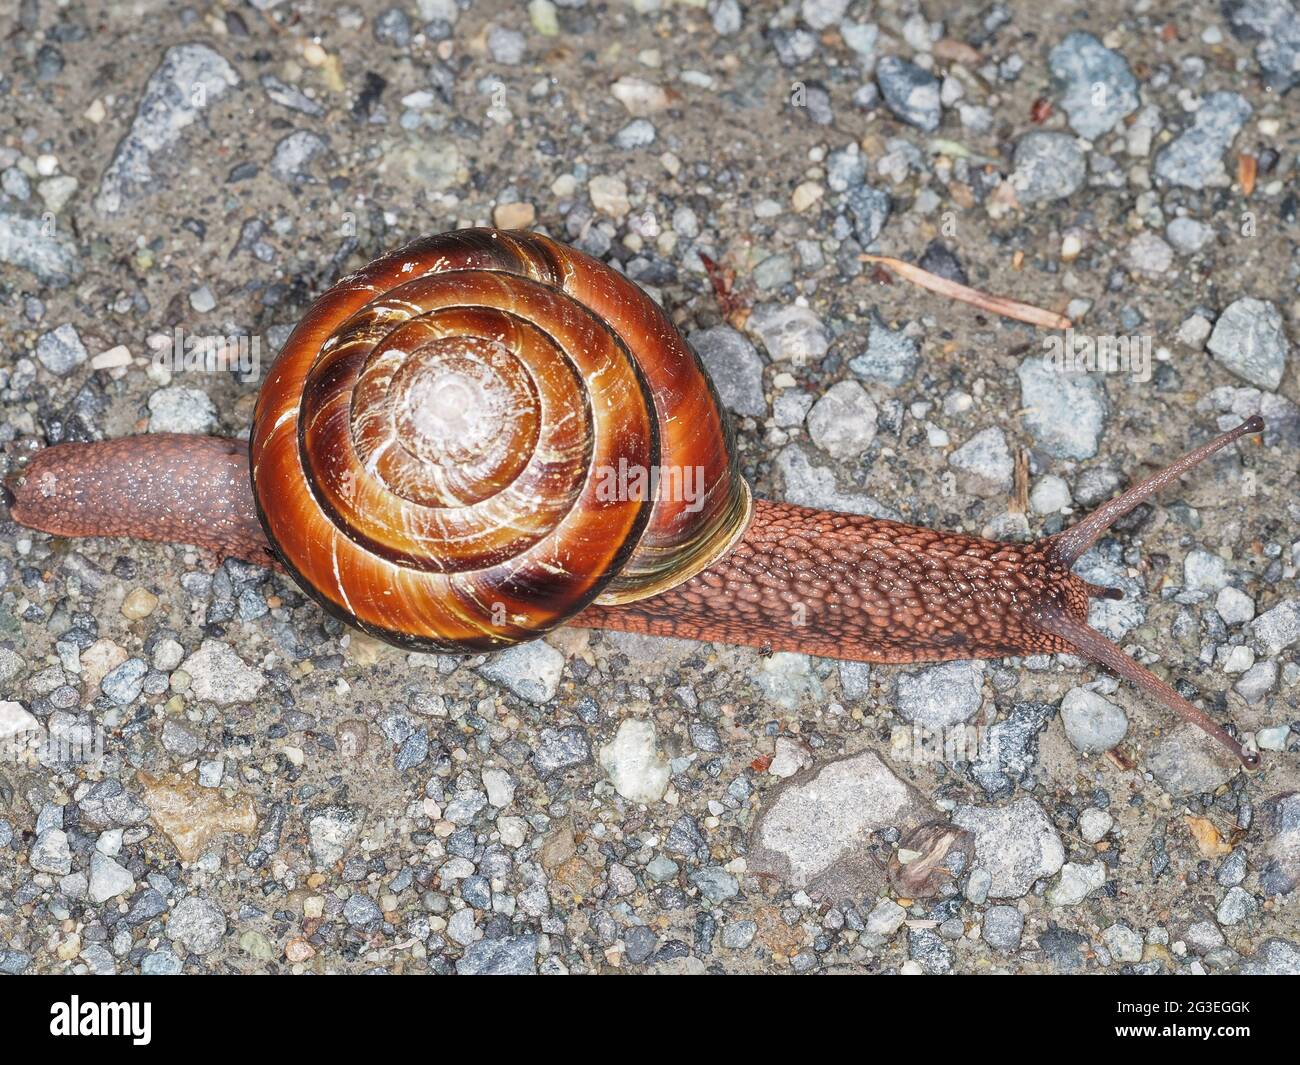 Pacific sideband snail (Monadenia fidelis) Stock Photo